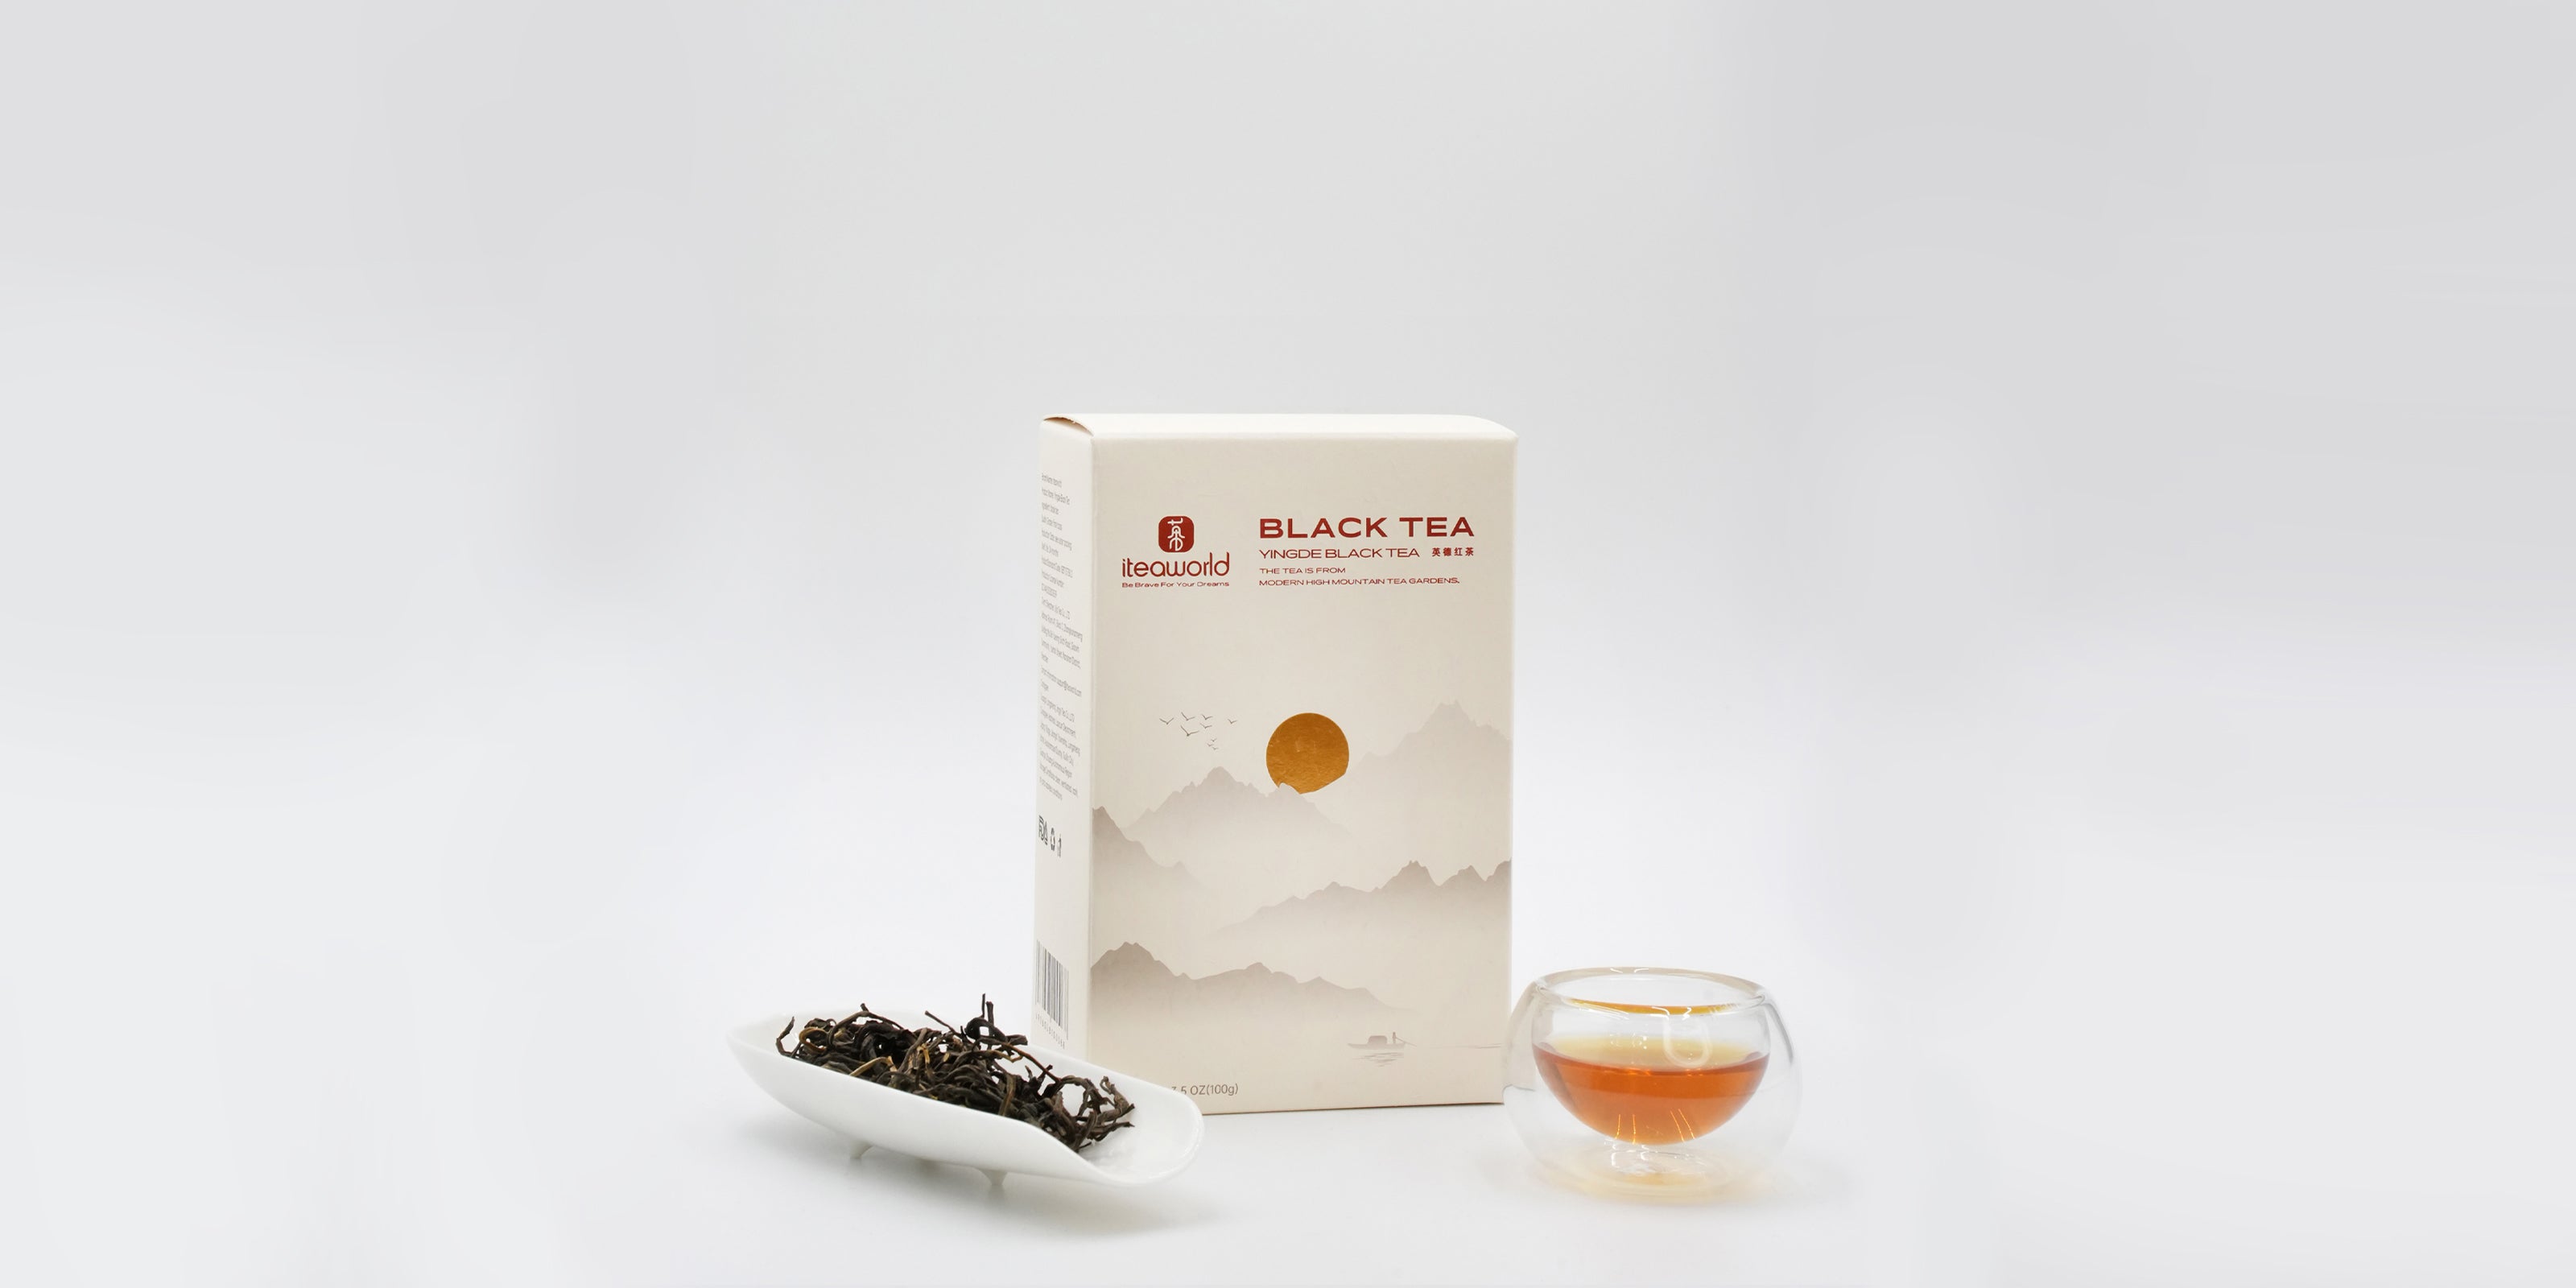 Yingde-Blcak-Tea-high-aroma-black-tea